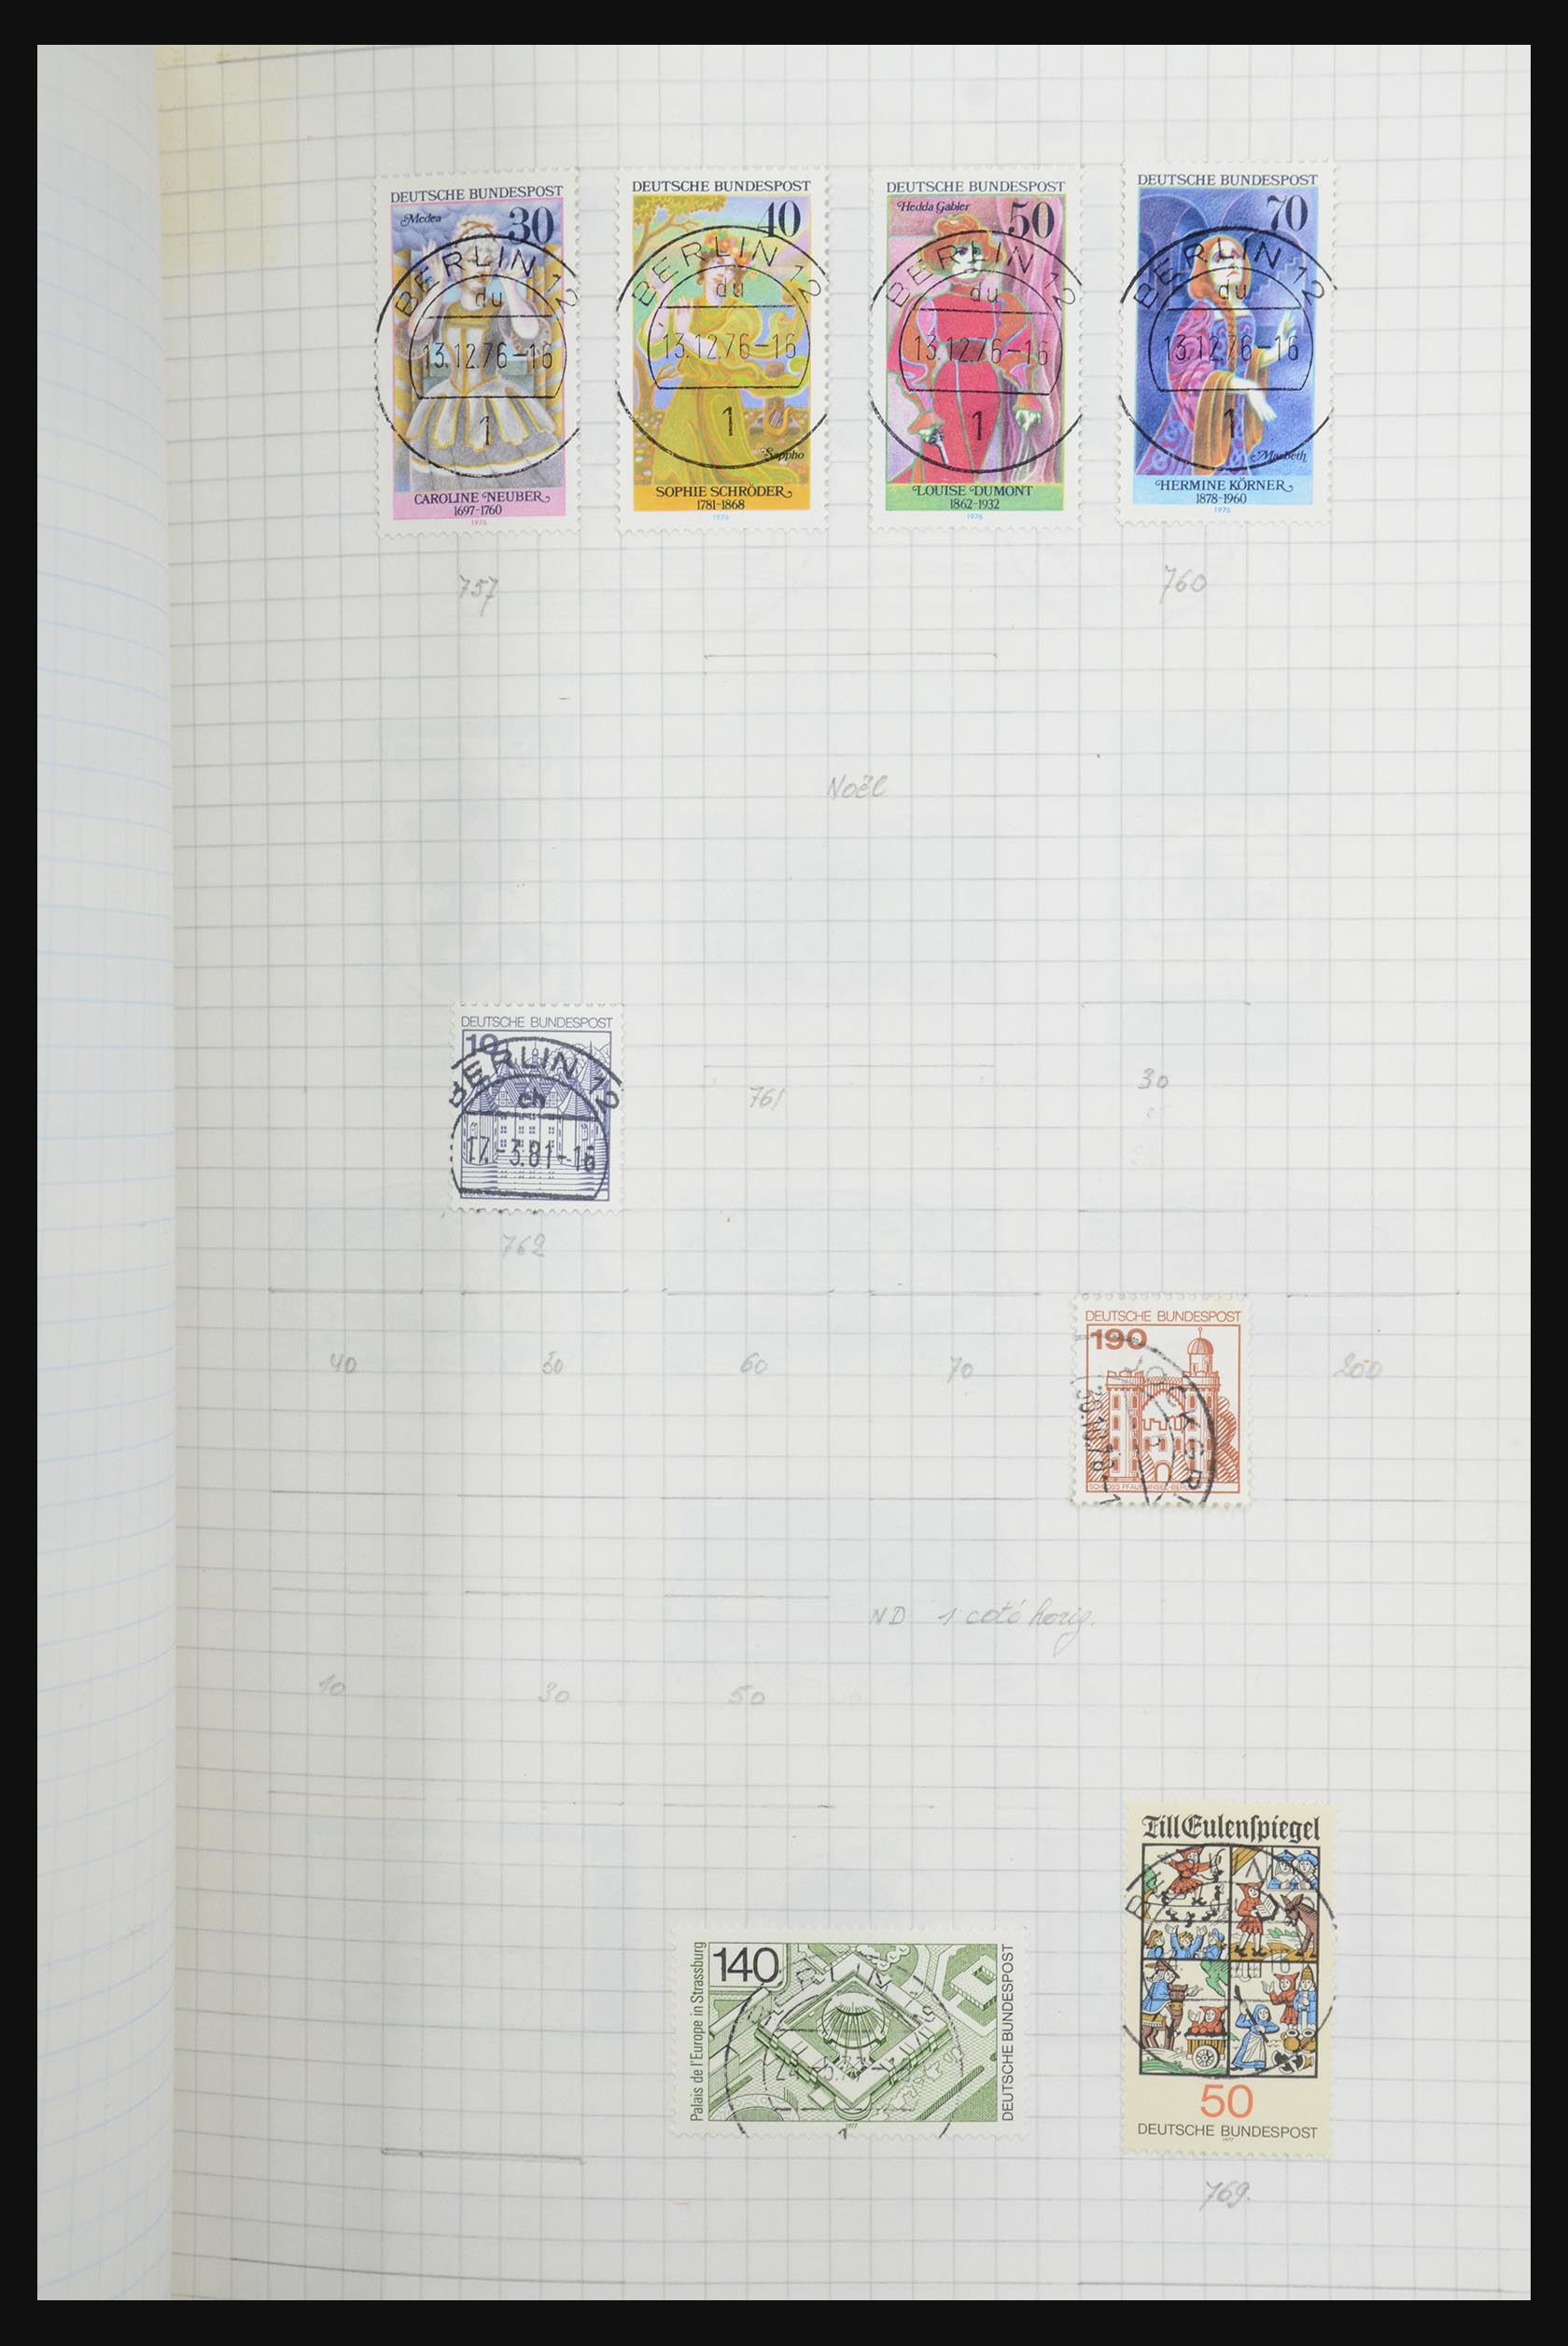 32398 085 - 32398 Bundespost and Berlin 1948-1984.